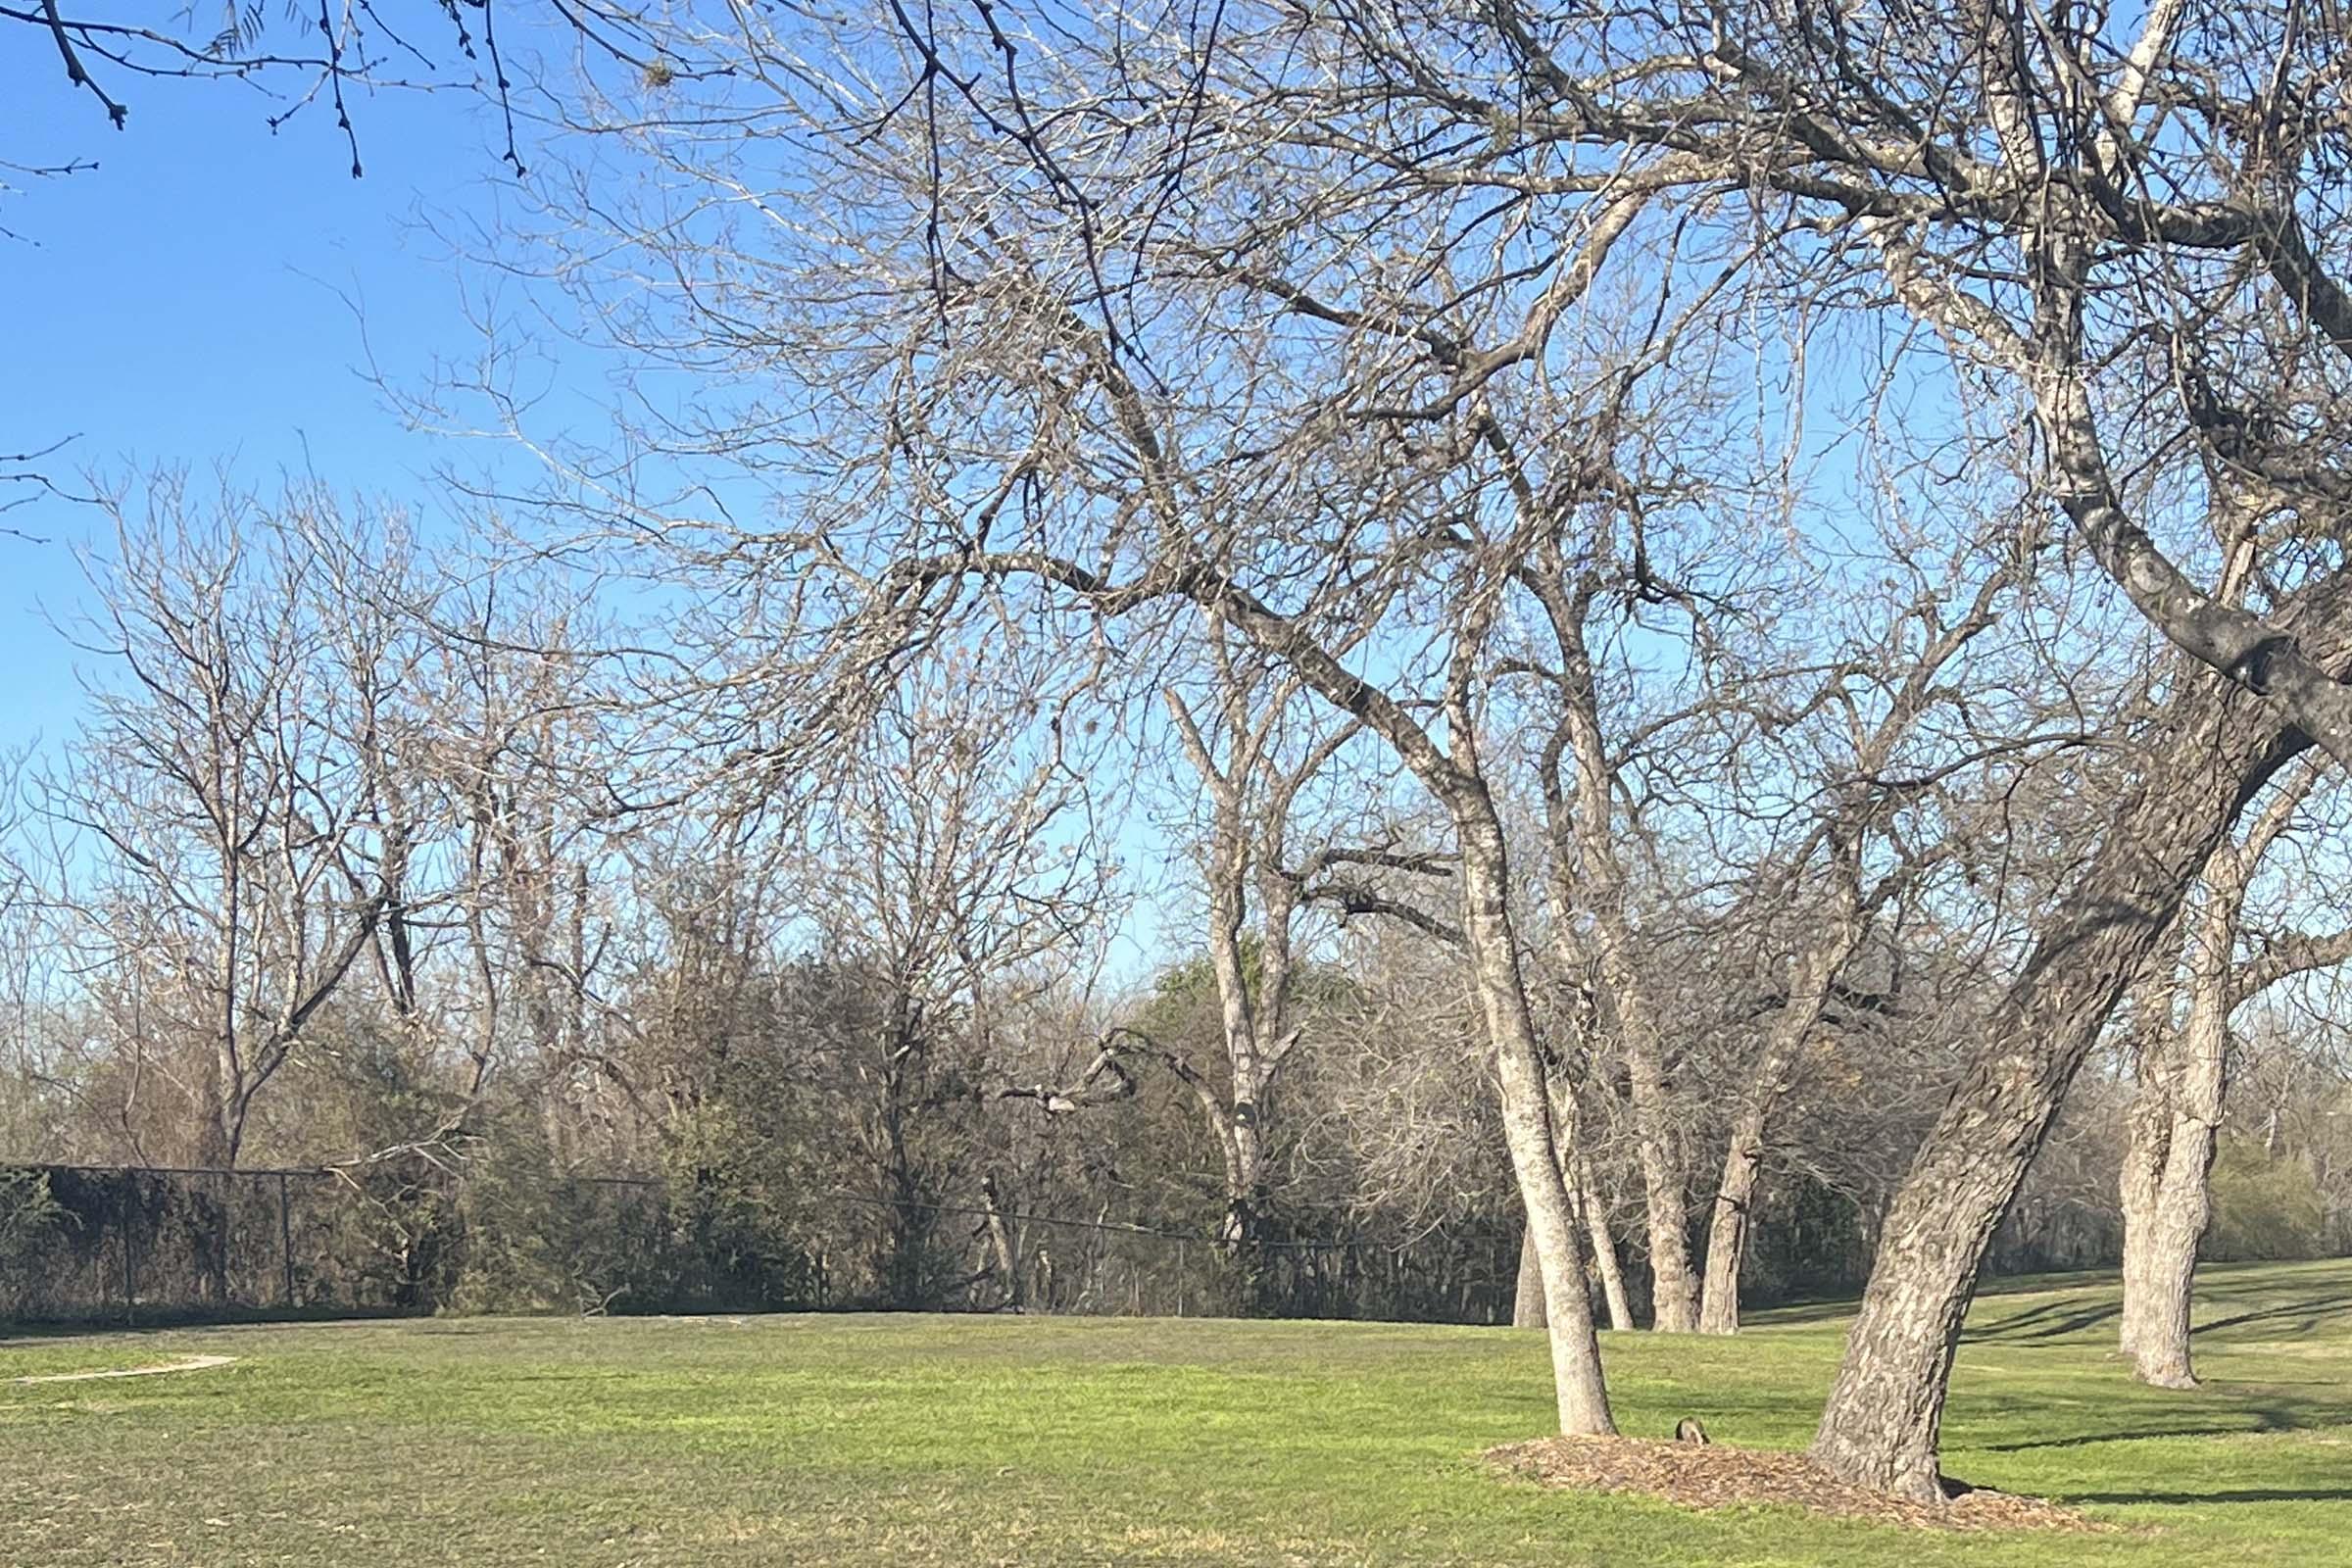 a tree in a grassy field